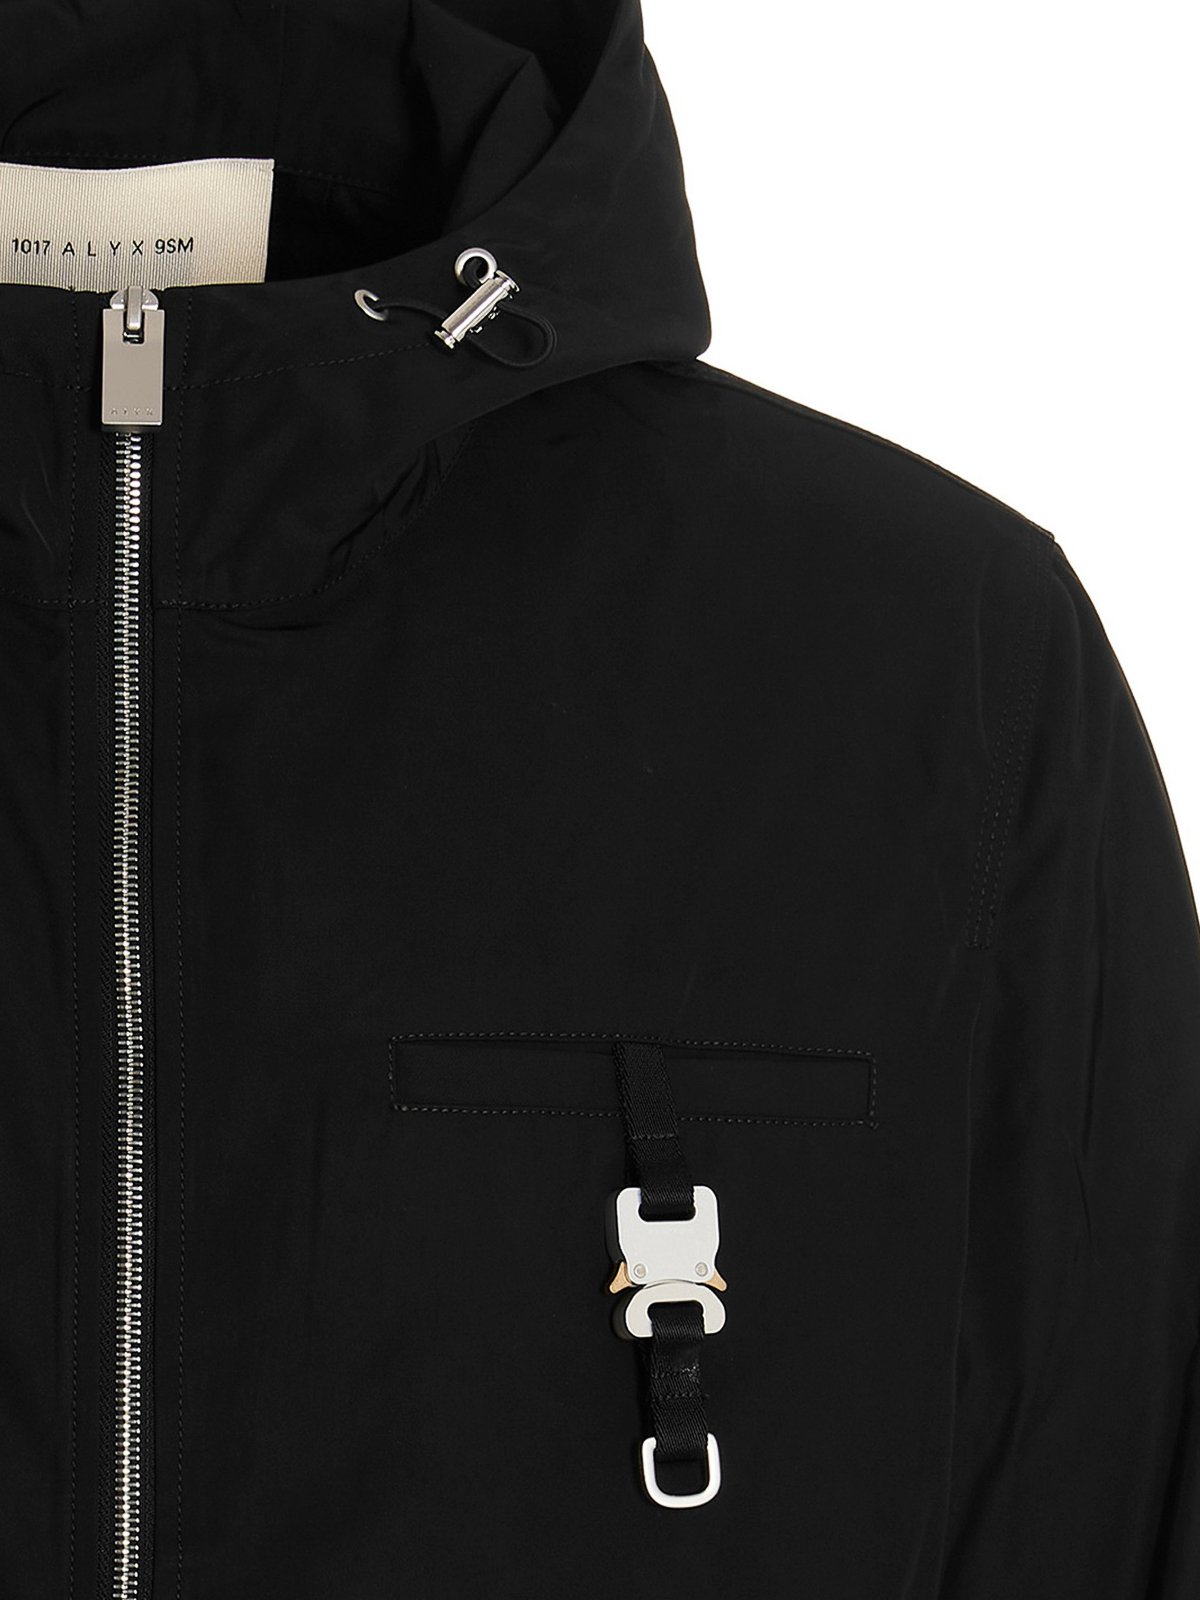 Casual jackets 1017 Alyx 9sm - Windbreaker hooded jacket ...